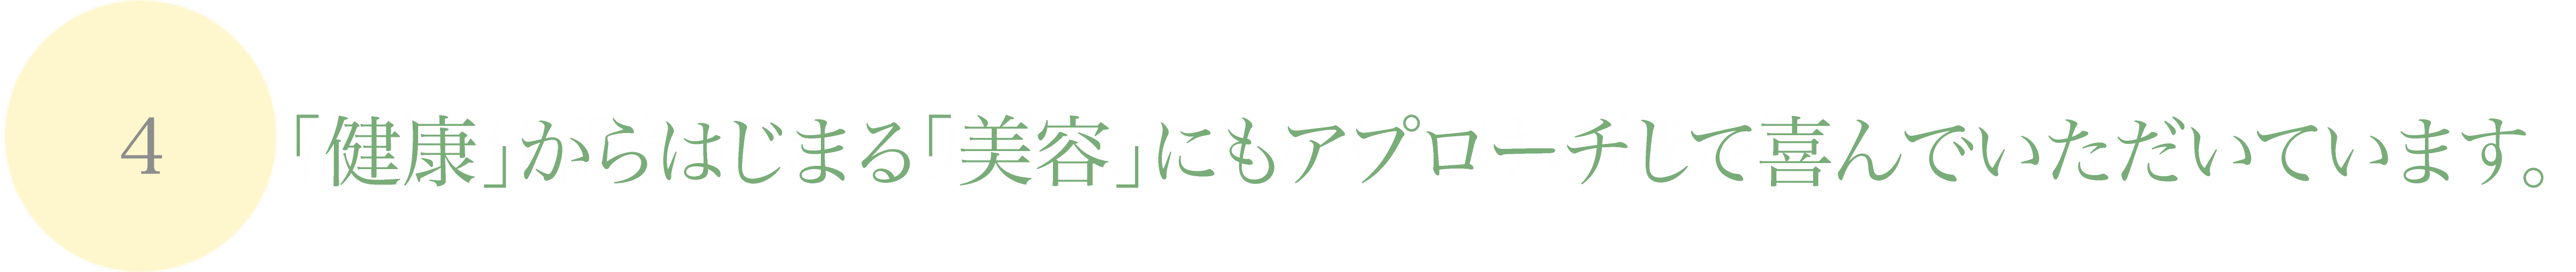 akaja 01 - <span style="font-family: serif;">治療院紹介